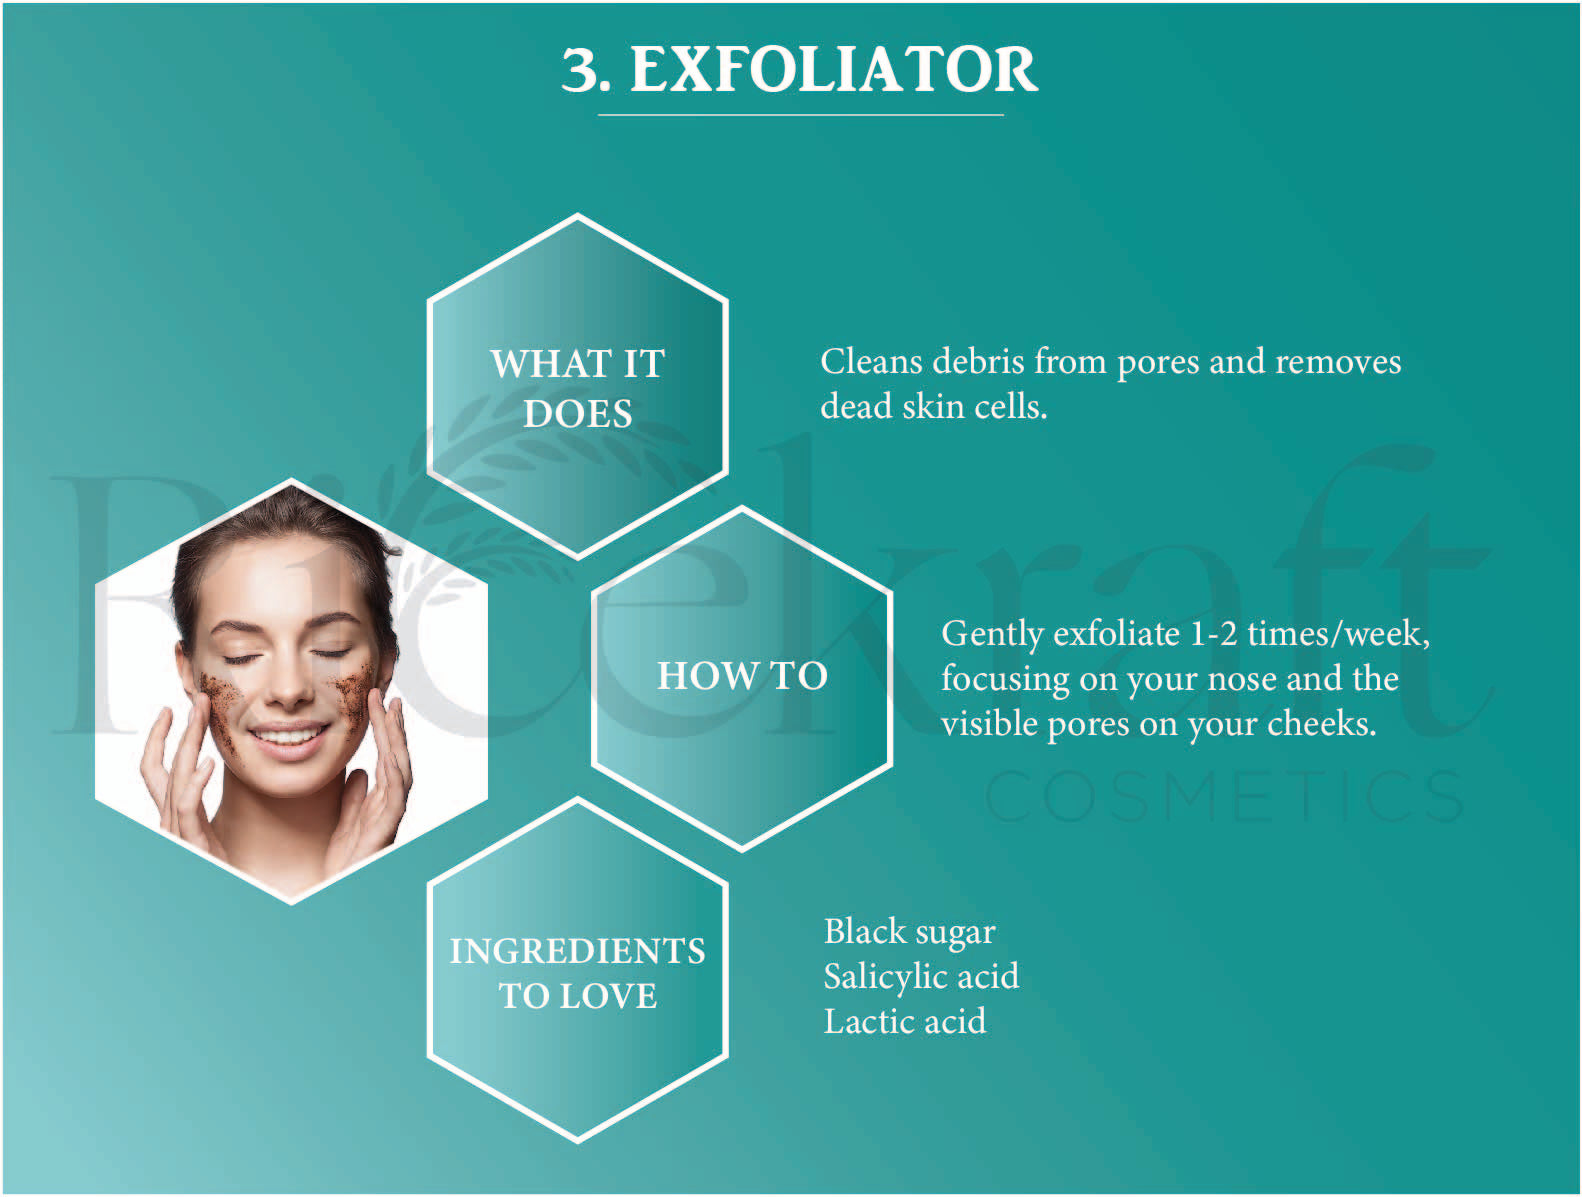 Clears pores & dead skin. Use 1-2 times/week on nose & cheeks. Ingredients: Black sugar, Salicylic acid, Lactic acid."